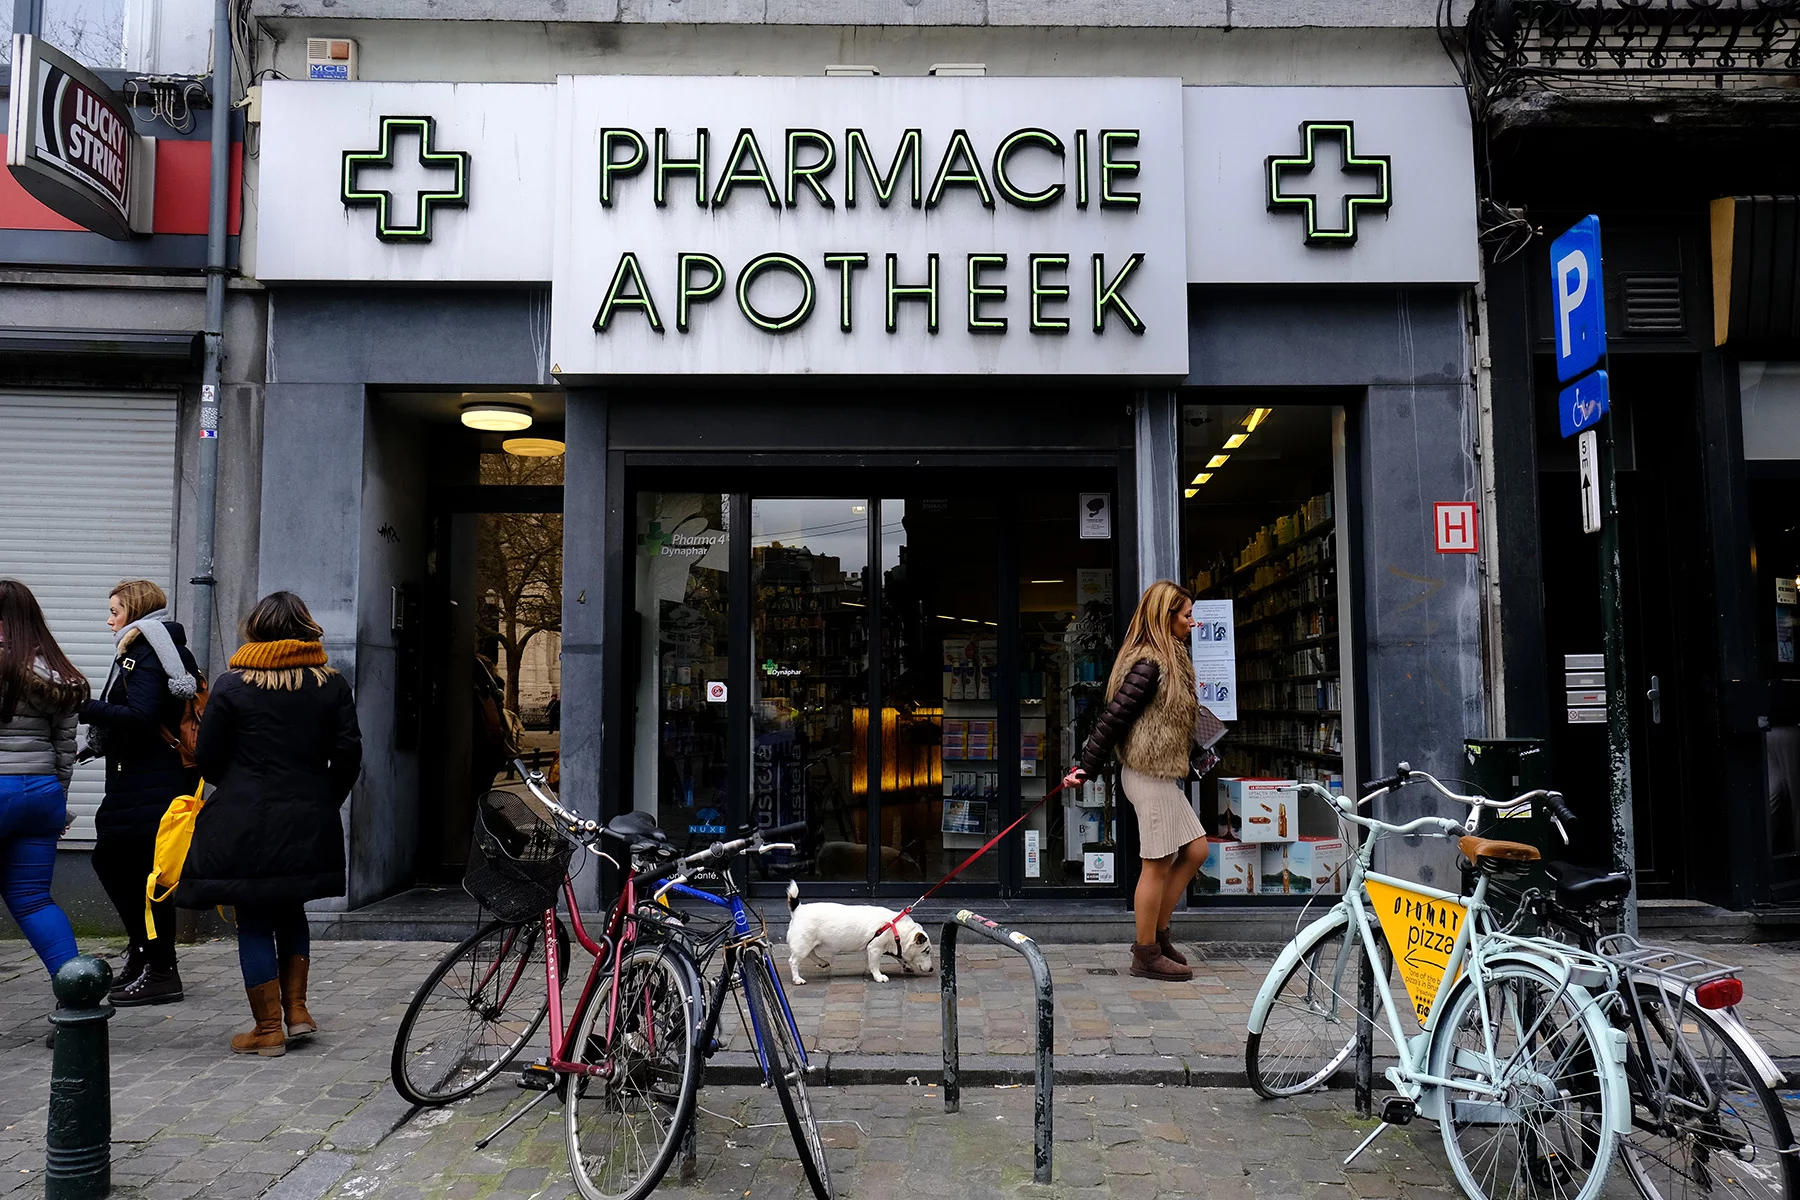 A pharmacy in Brussels, Belgium